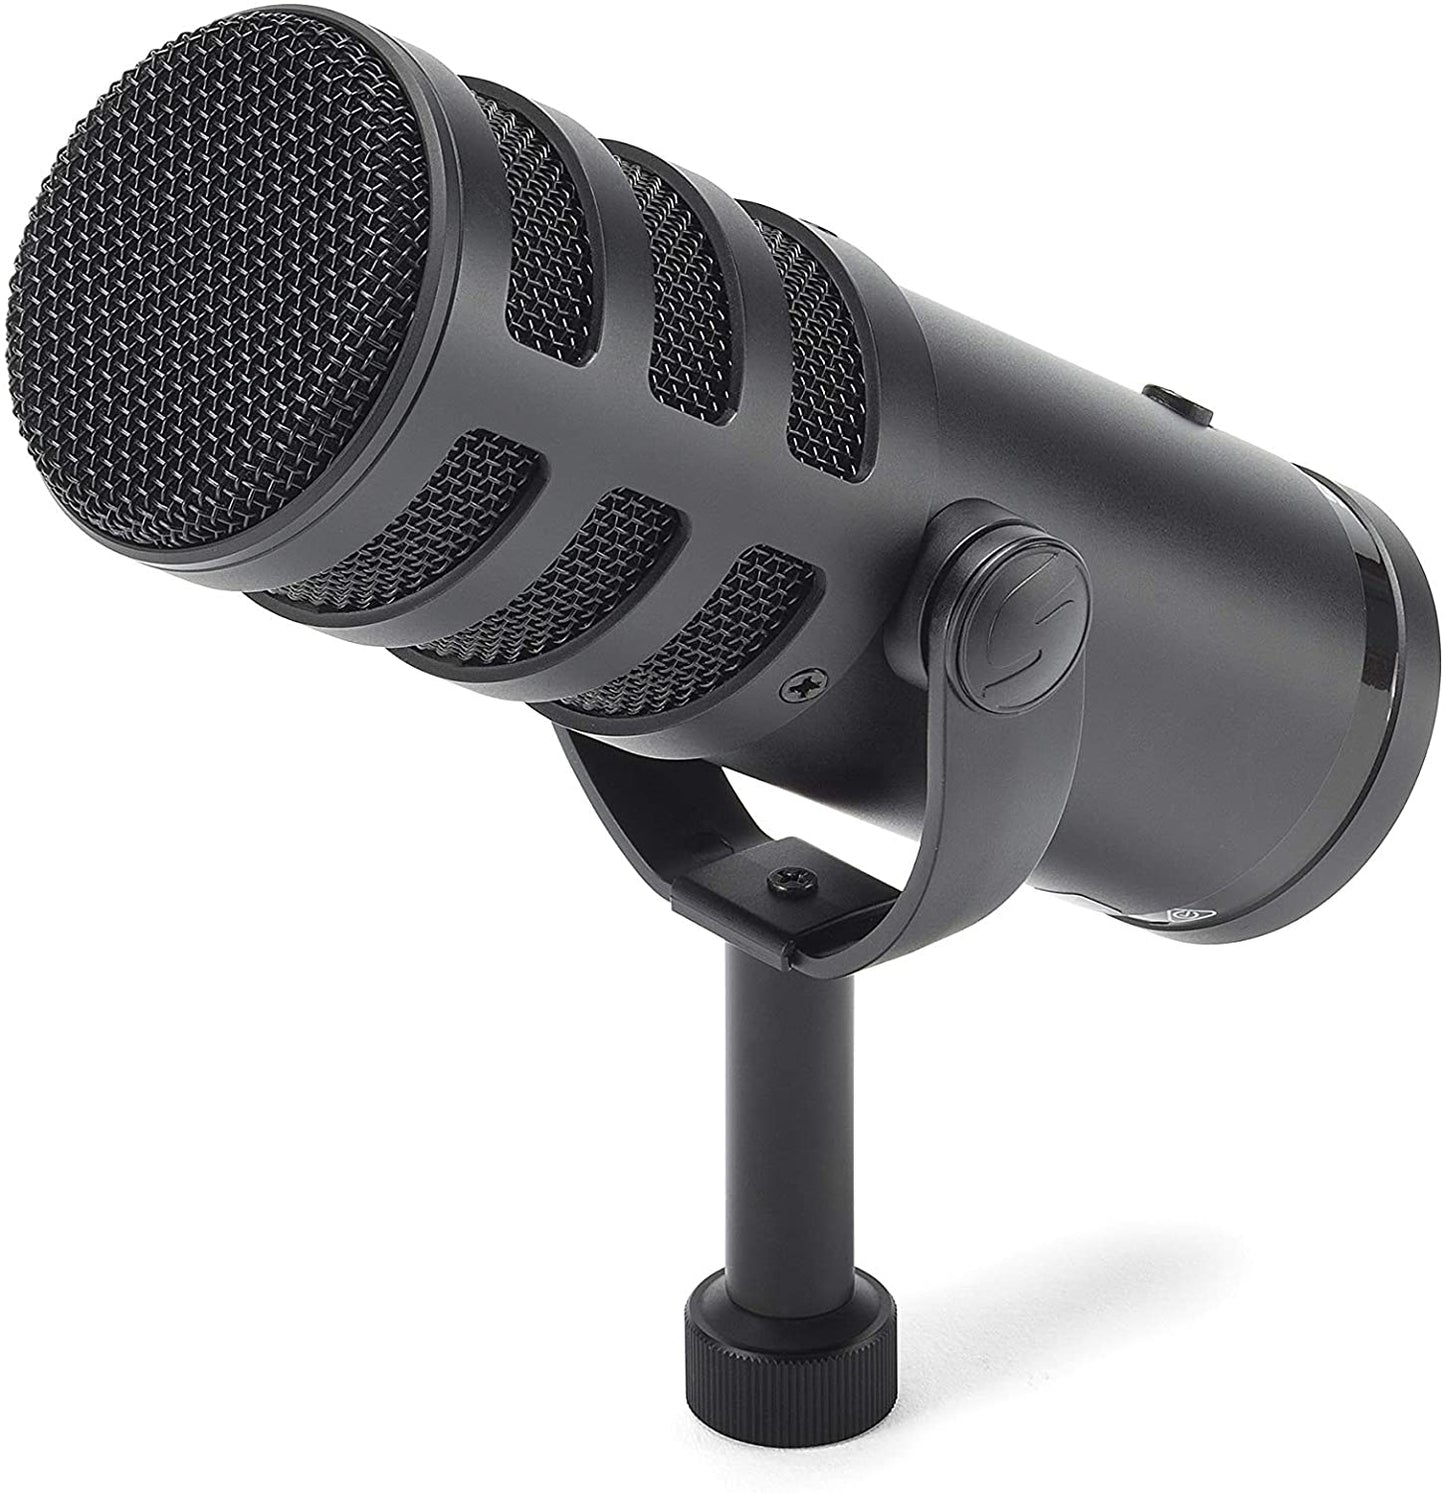 Samson Q9U Professional USB/XLR Dynamic Broadcast Microphone Podcast Music Recording